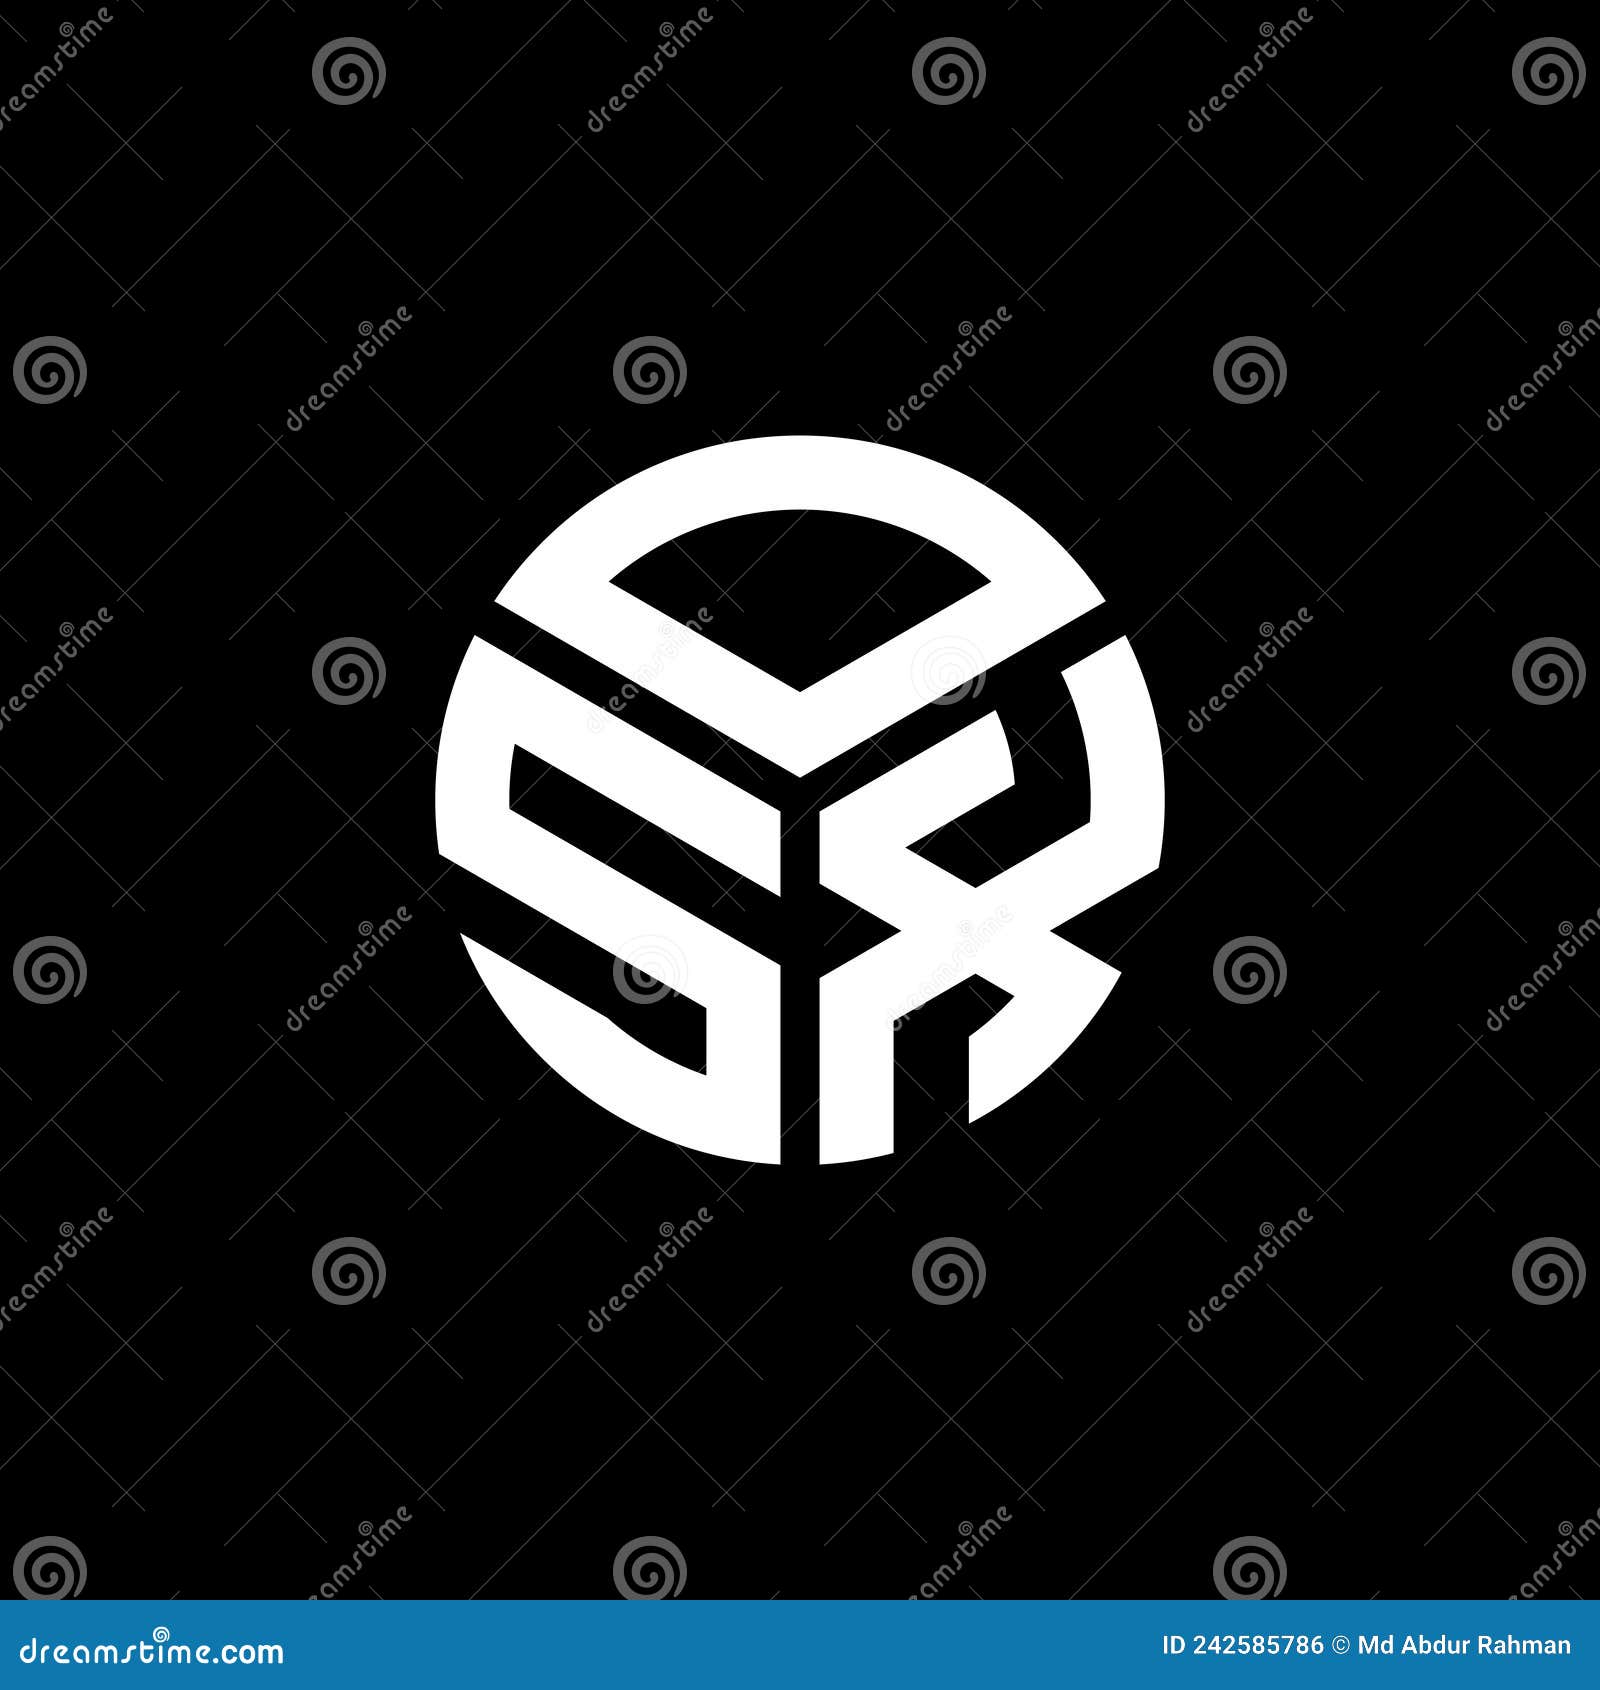 osx letter logo  on black background. osx creative initials letter logo concept. osx letter 